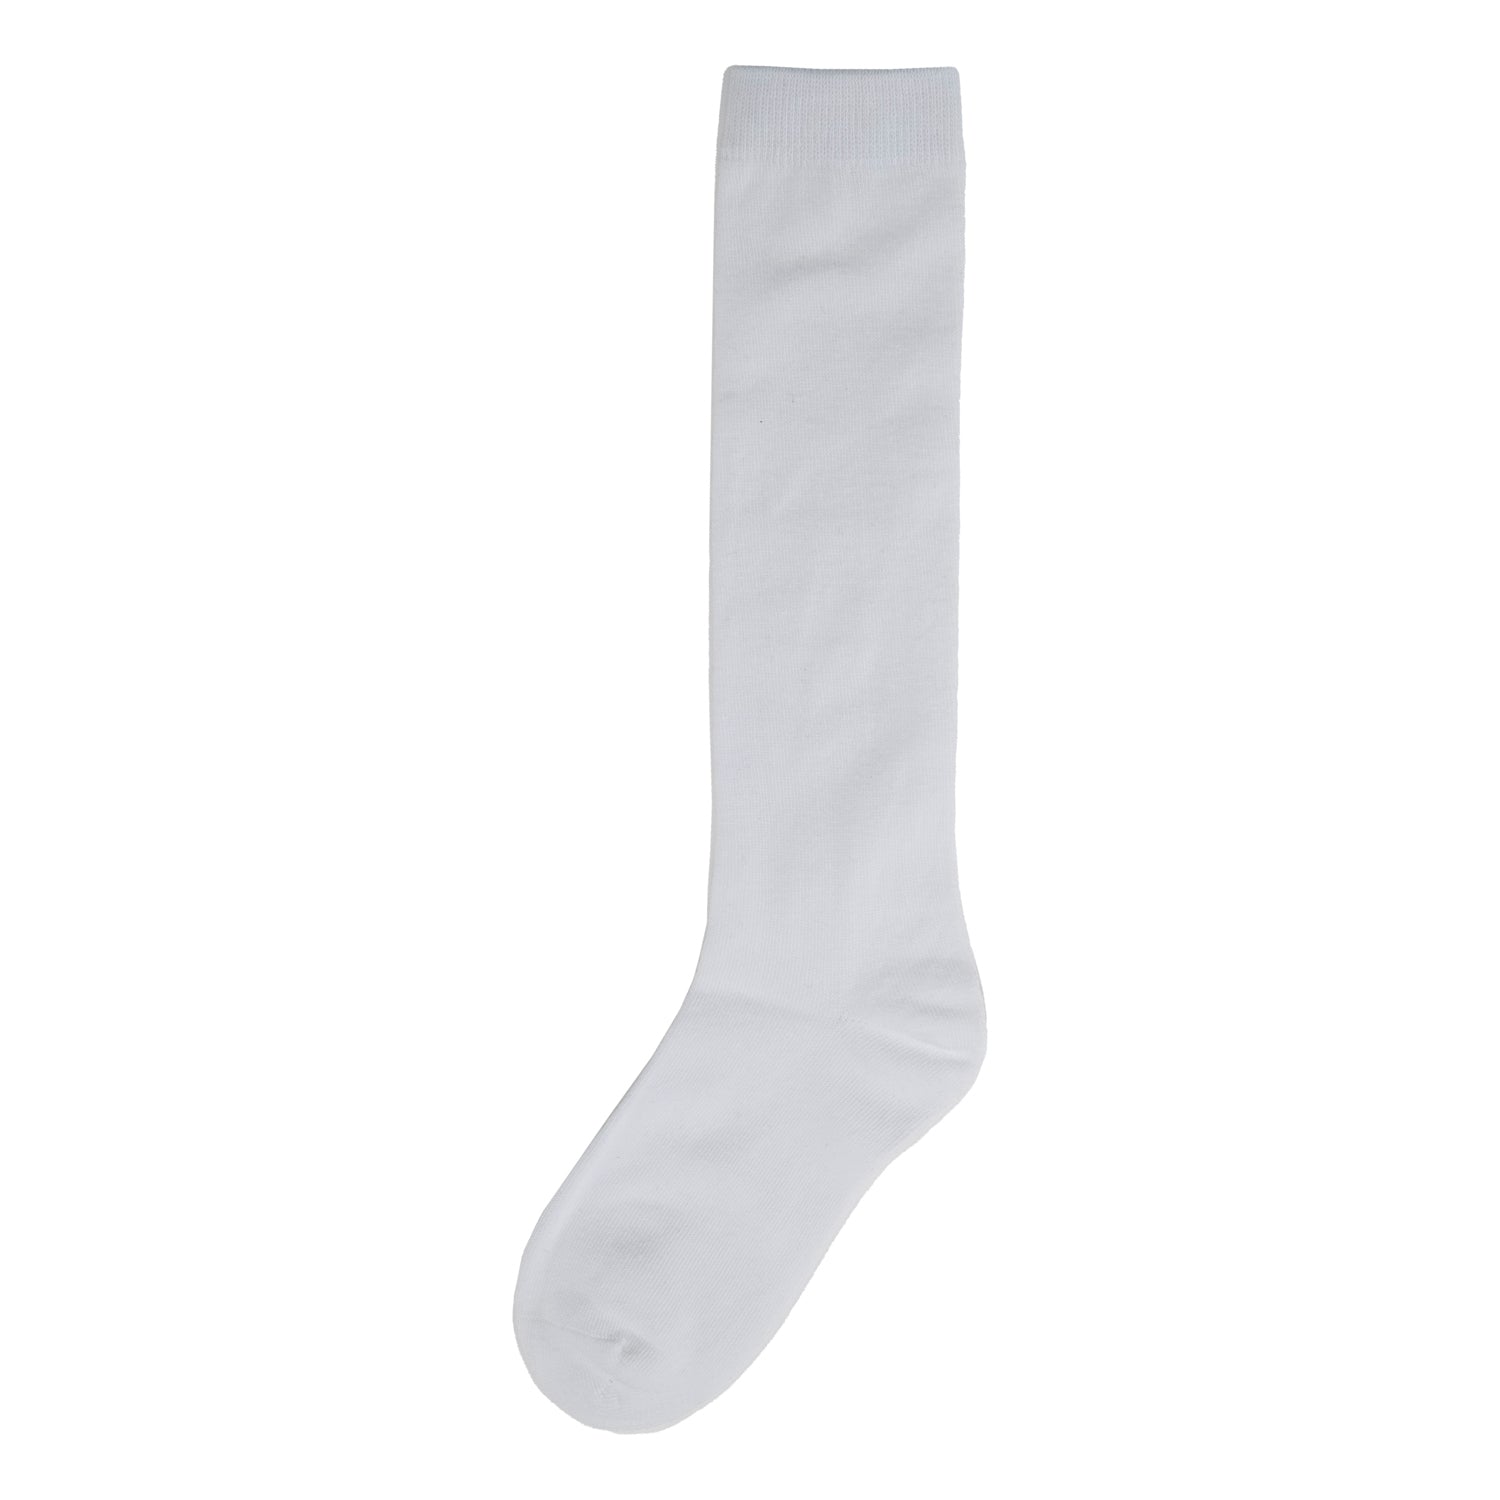 Trimfit Socks Women's Flat Knit Knee High Socks 01455 – Good's Store Online